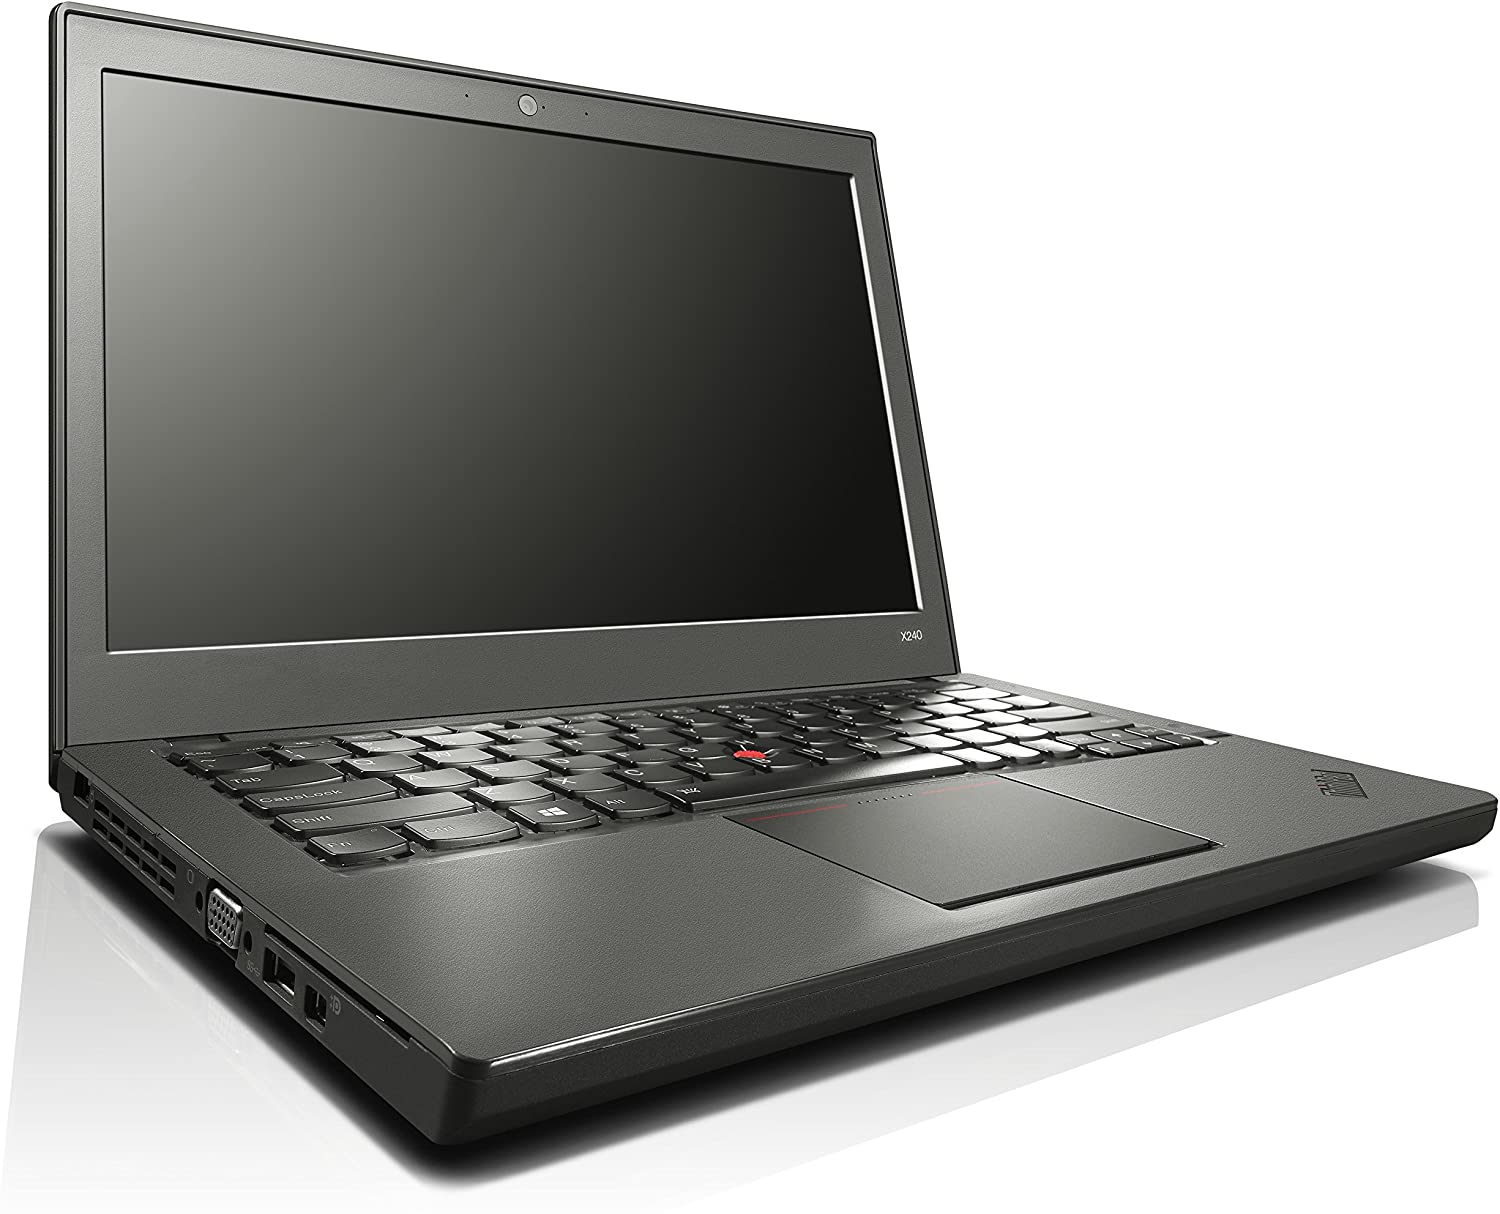 Lenovo Thinkpad X240 i5 4300u 1.9GHz 8GB Ram 128GB SSD Windows 10 Pro.